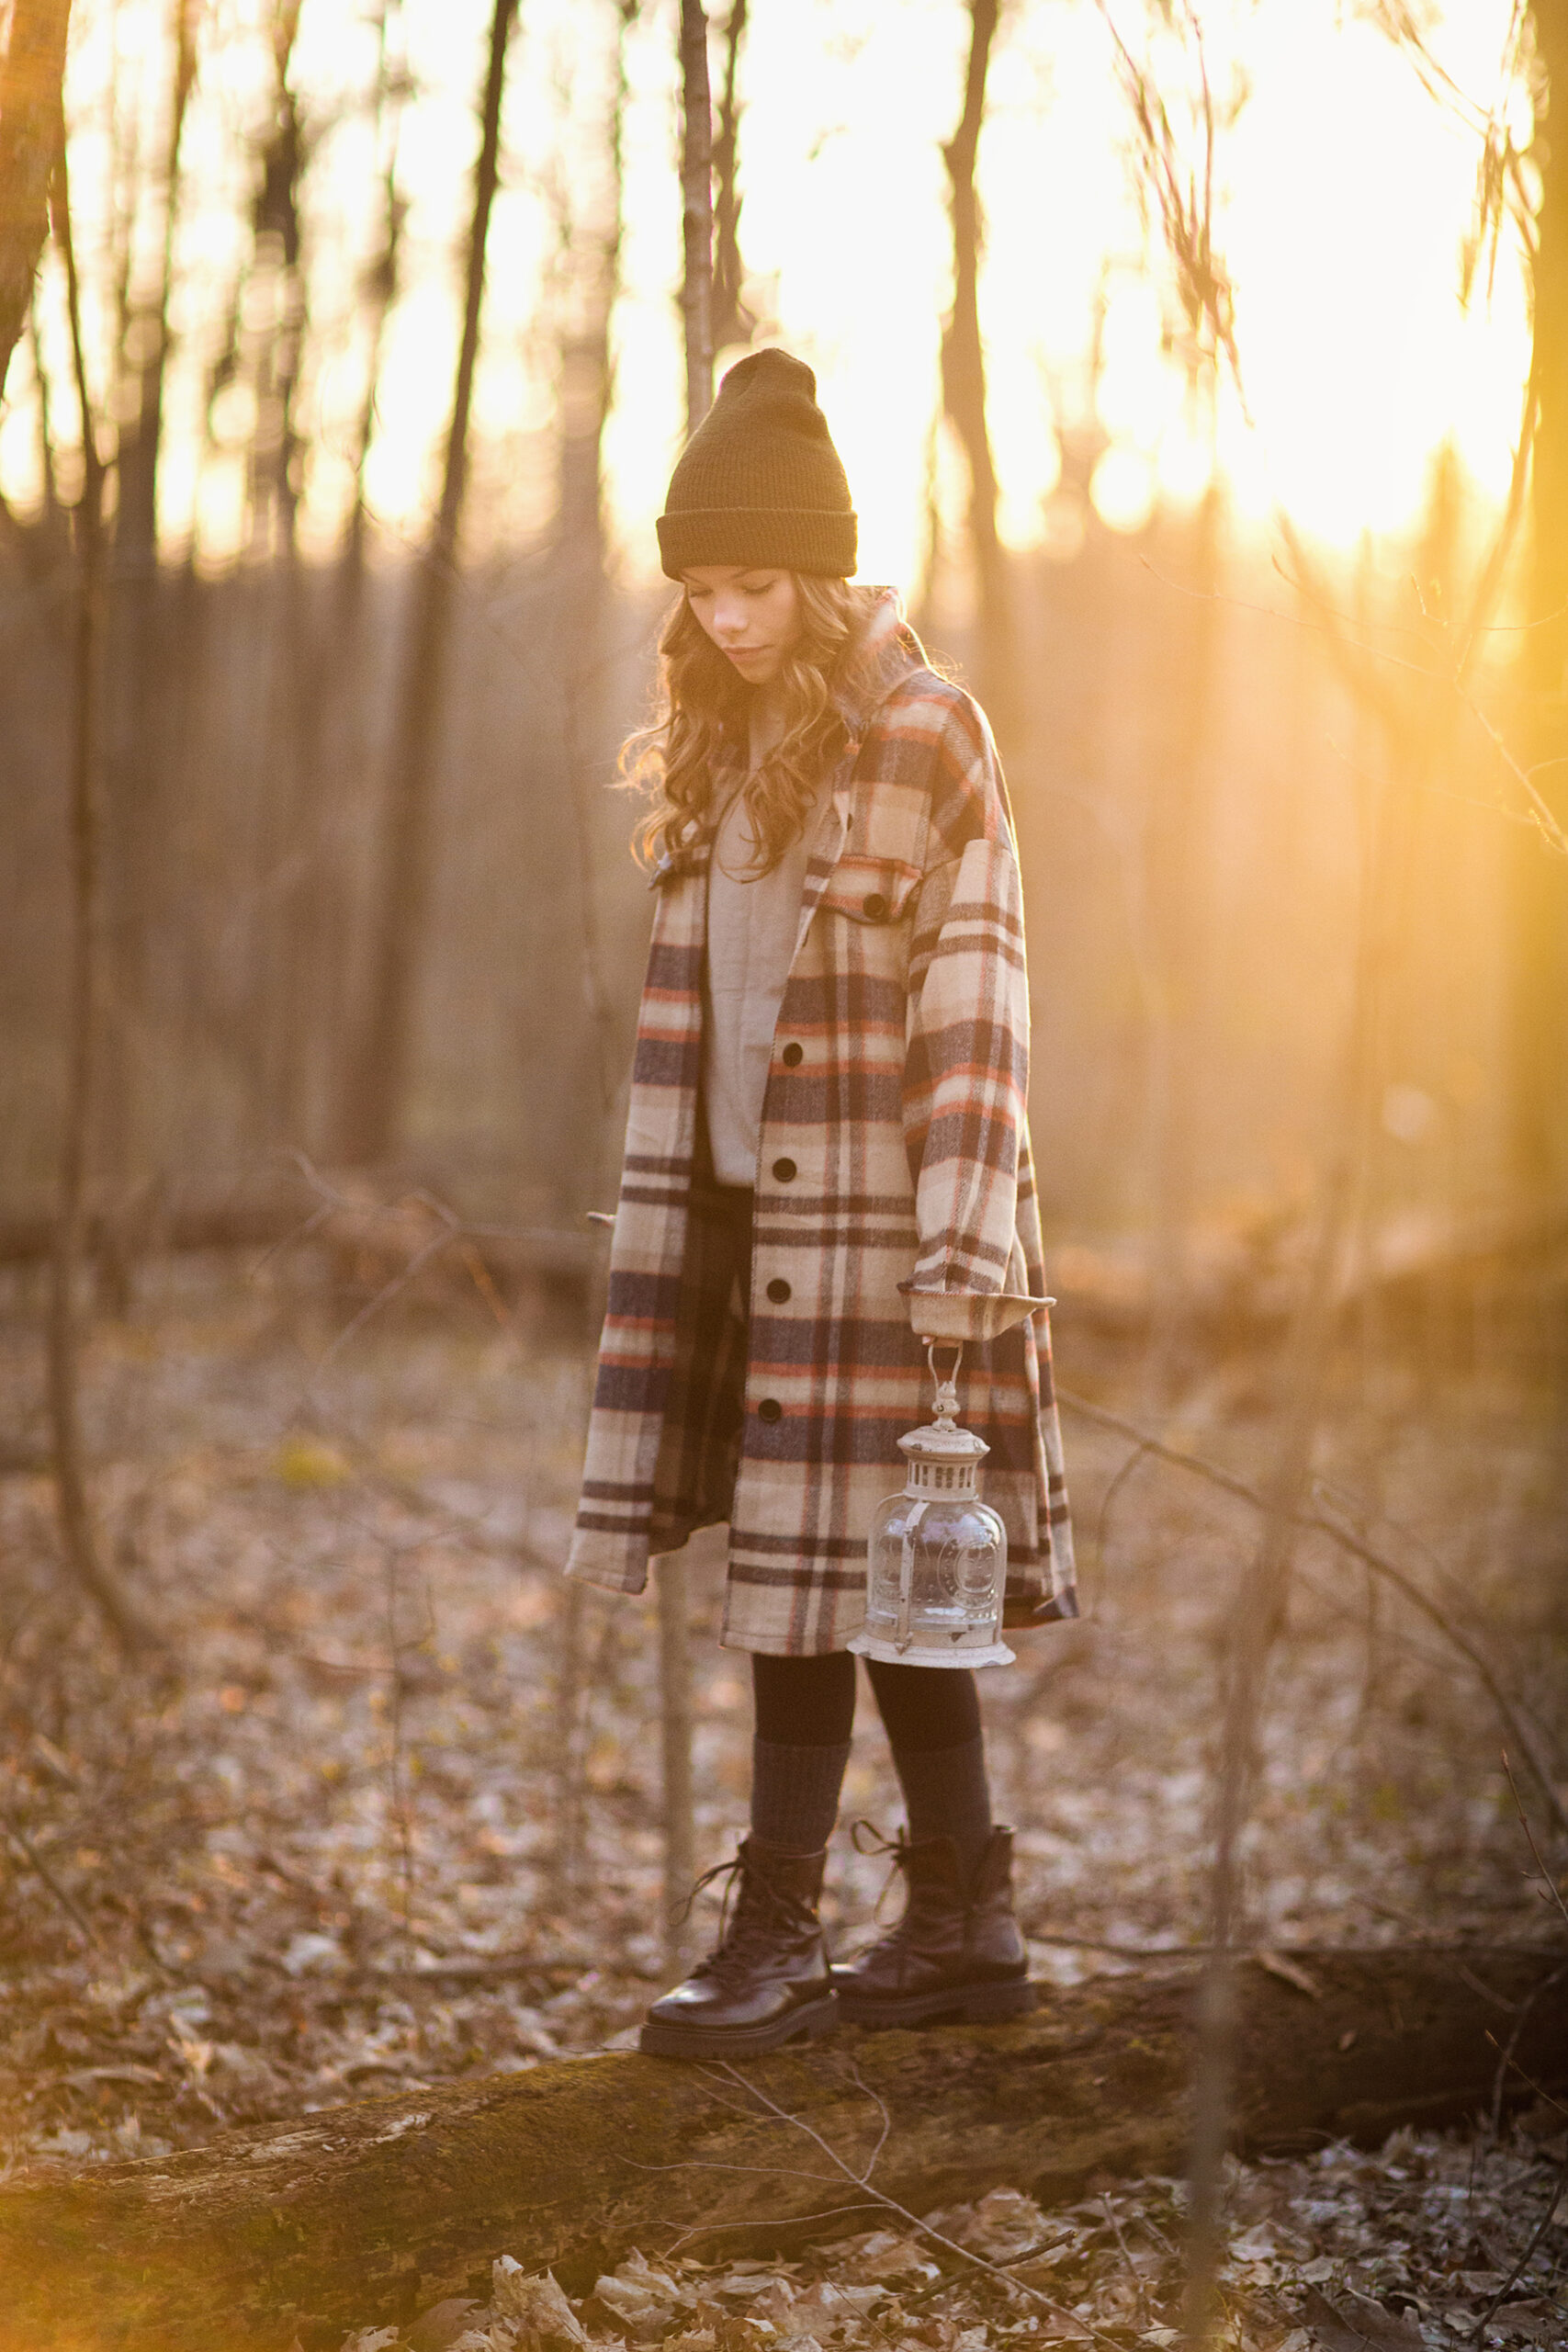 Model walking on log in woods at sundown.